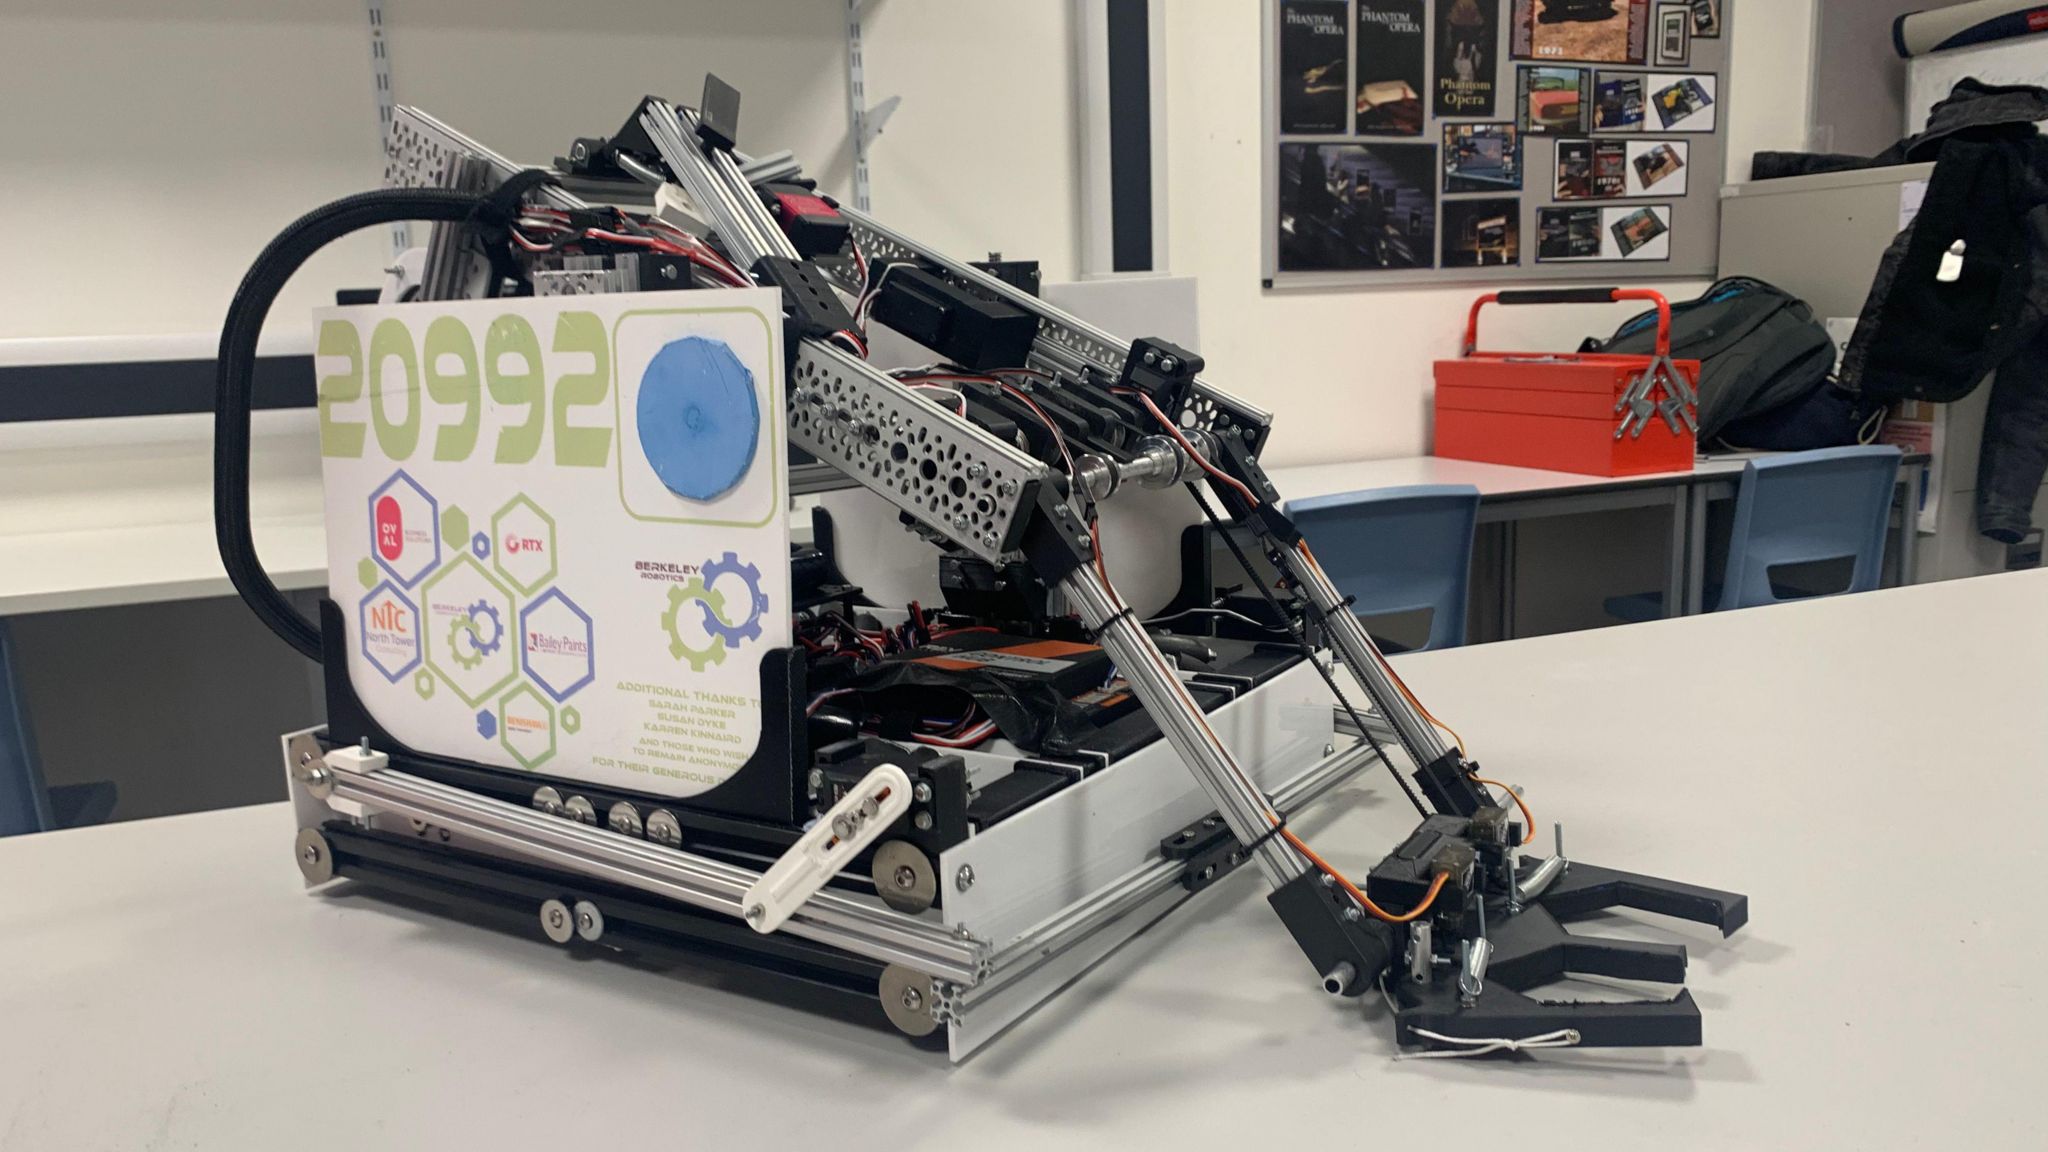 The Berkeley Green UTC team's robot